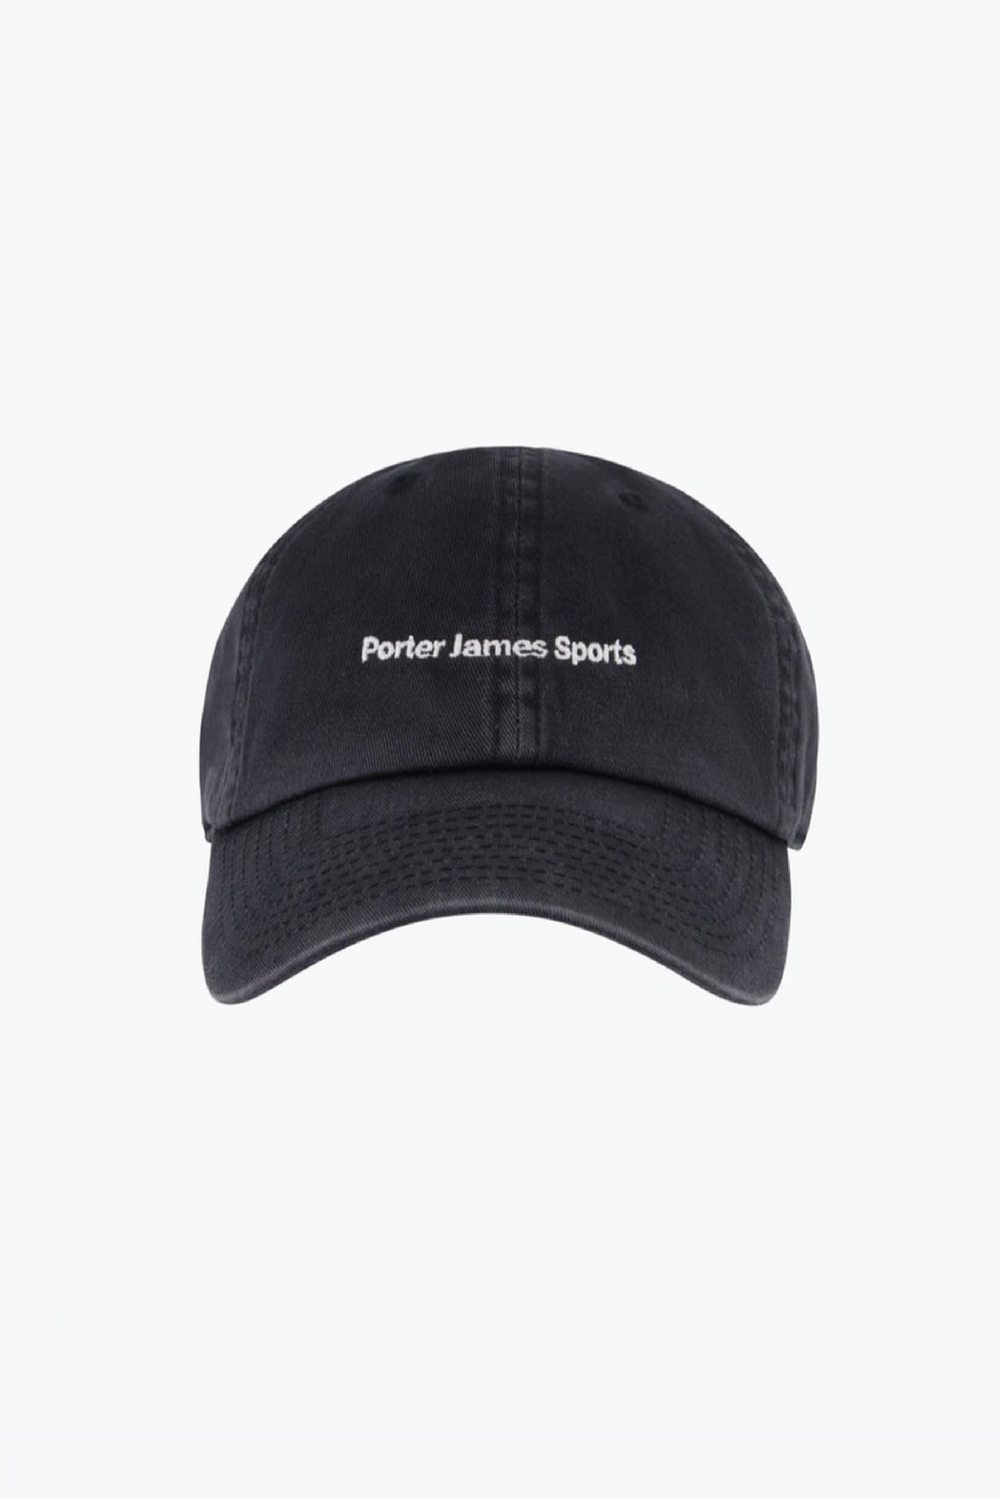 Porter James Sports Classic Cap - Soft Black | PORTER JAMES SPORTS | Mad About The Boy